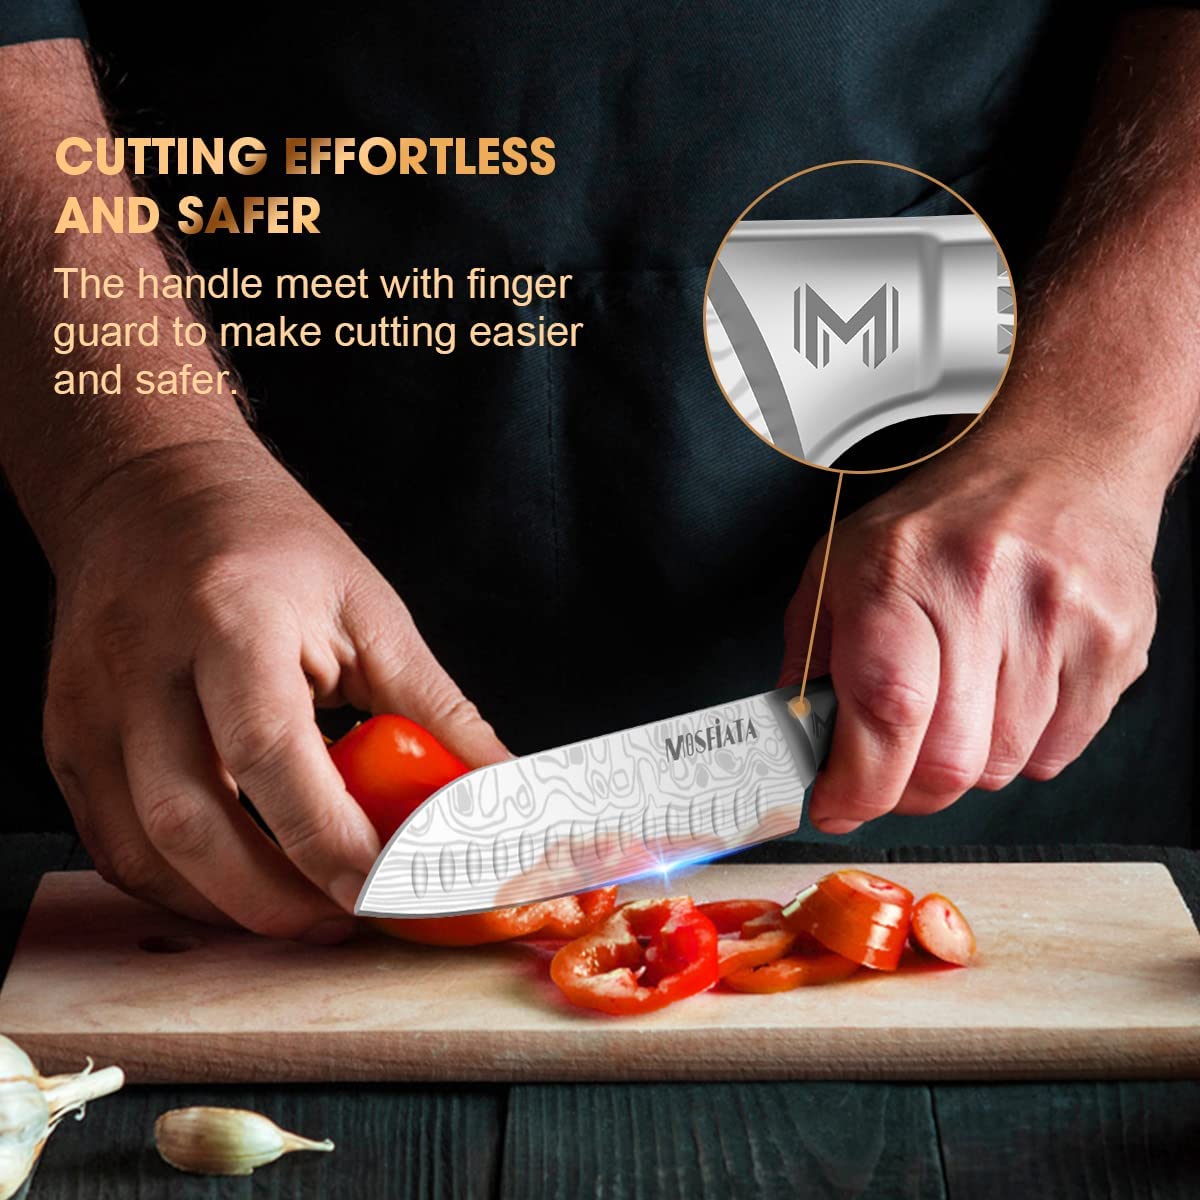  MOSFiATA Professional Chef Knife Set with German High